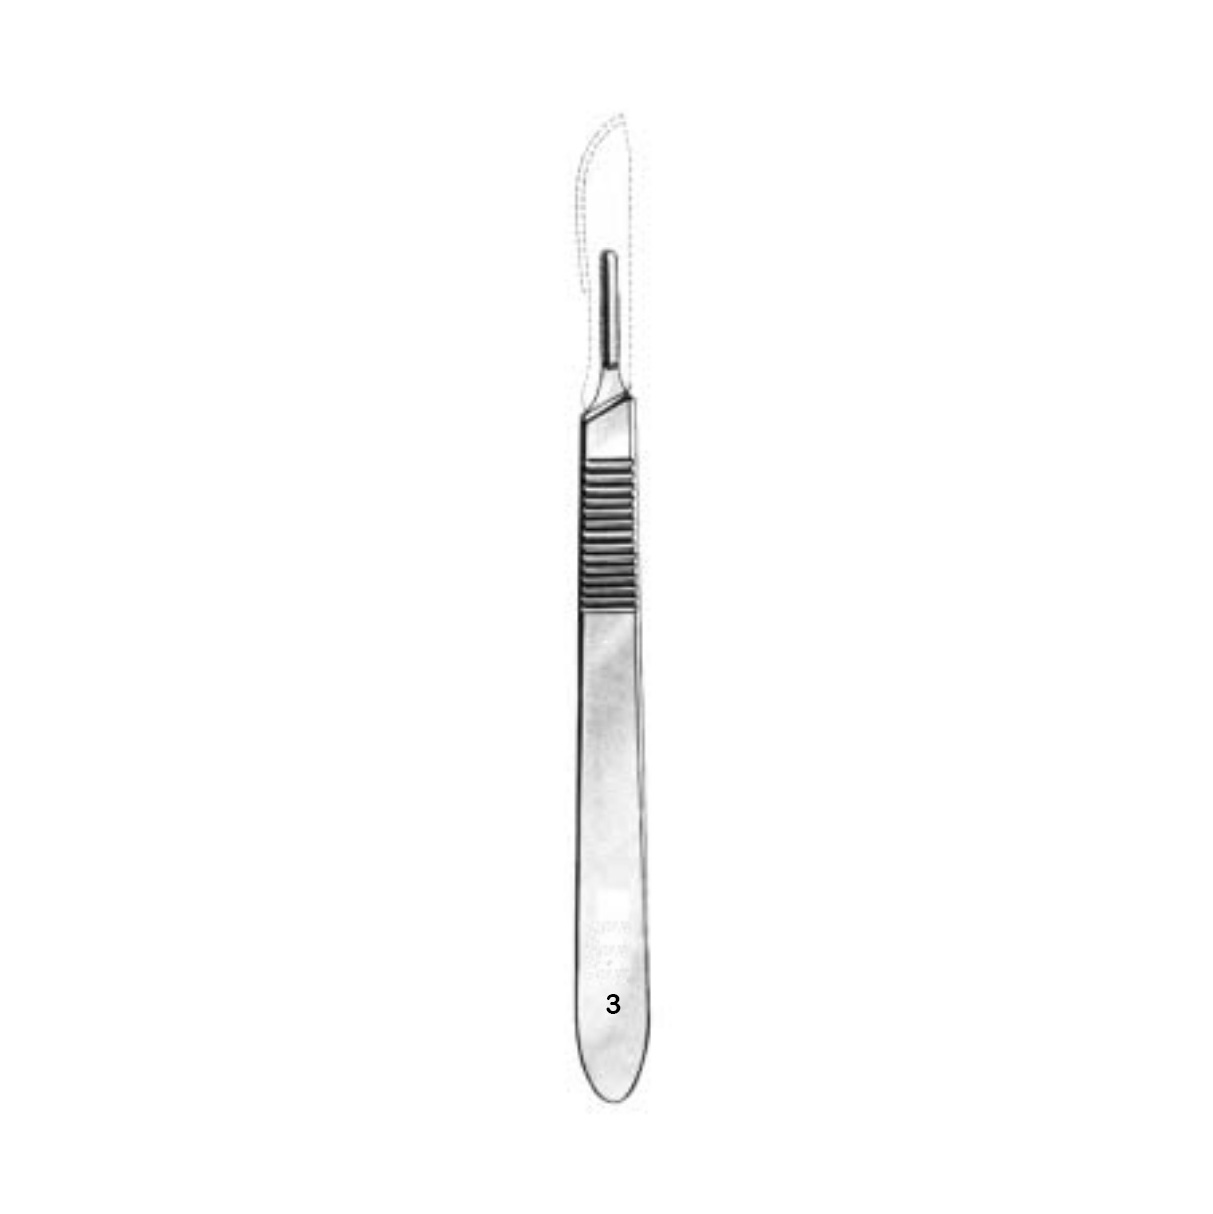 Excellent scalpel handle no. 3